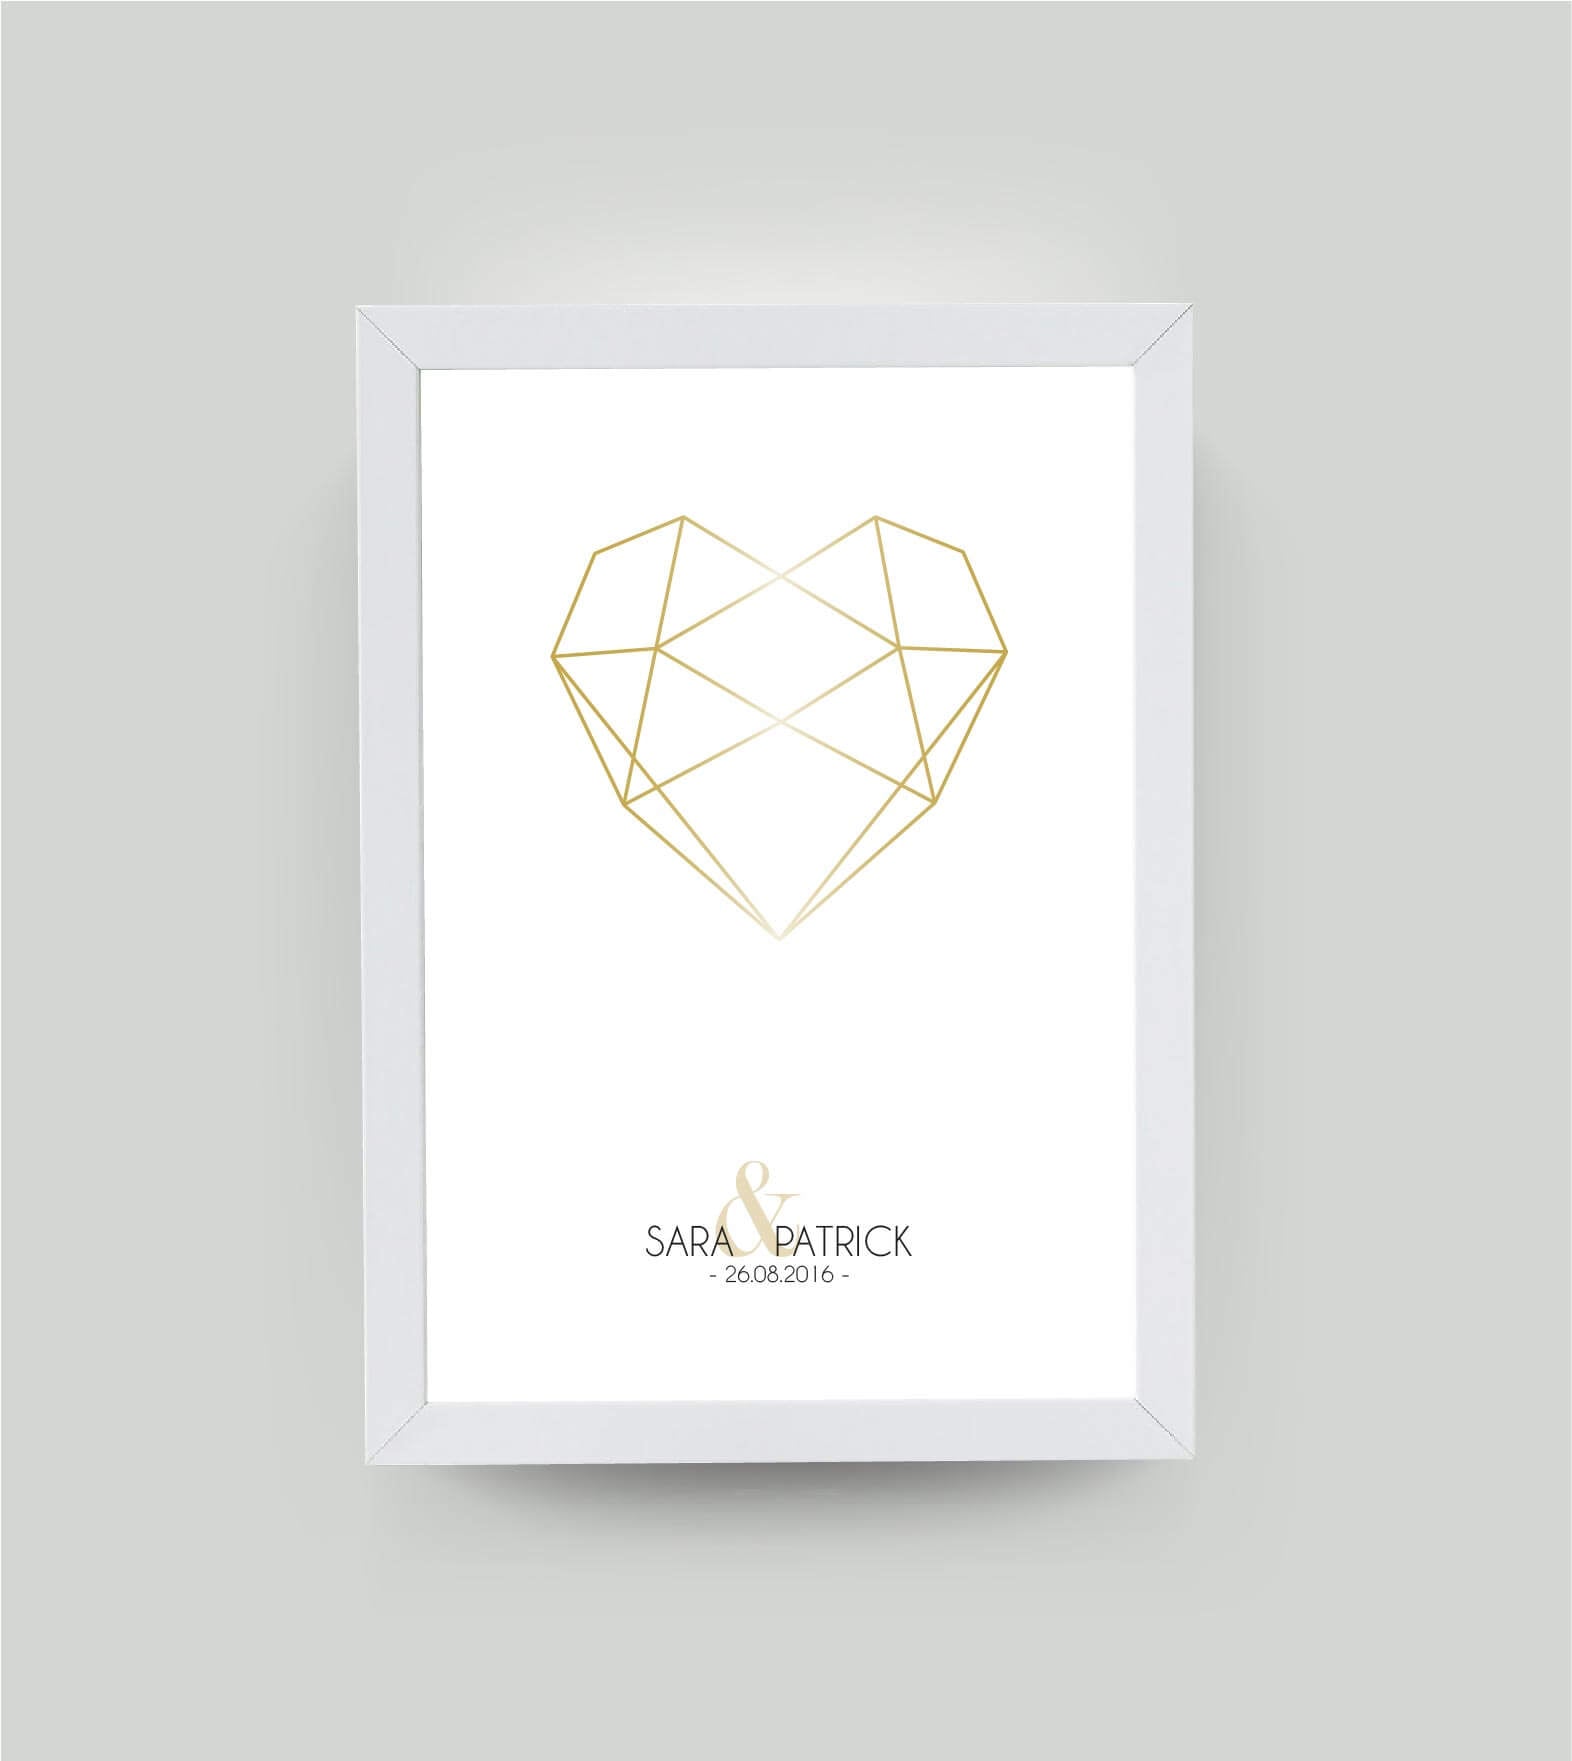 Personalisiertes Bild “Diamant”, Bildfarbe: Gold, Bildgröße: 13x18cm, Bilderrahmen: Ohne Bilderrahmen, Copyright: 321geschenke.de